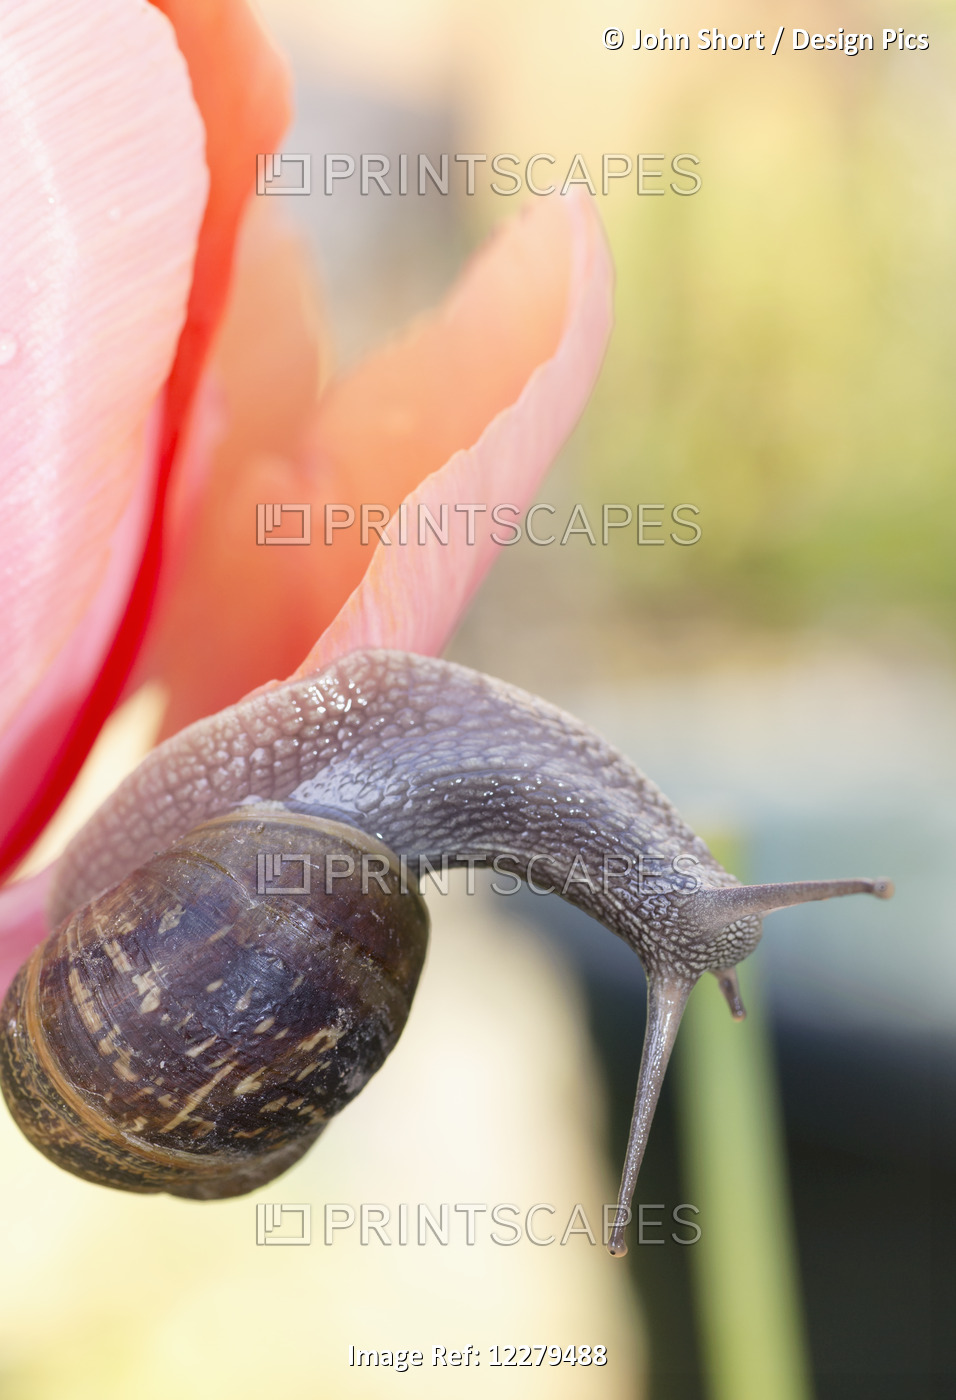 Snail On A Tulip; Whitburn, England